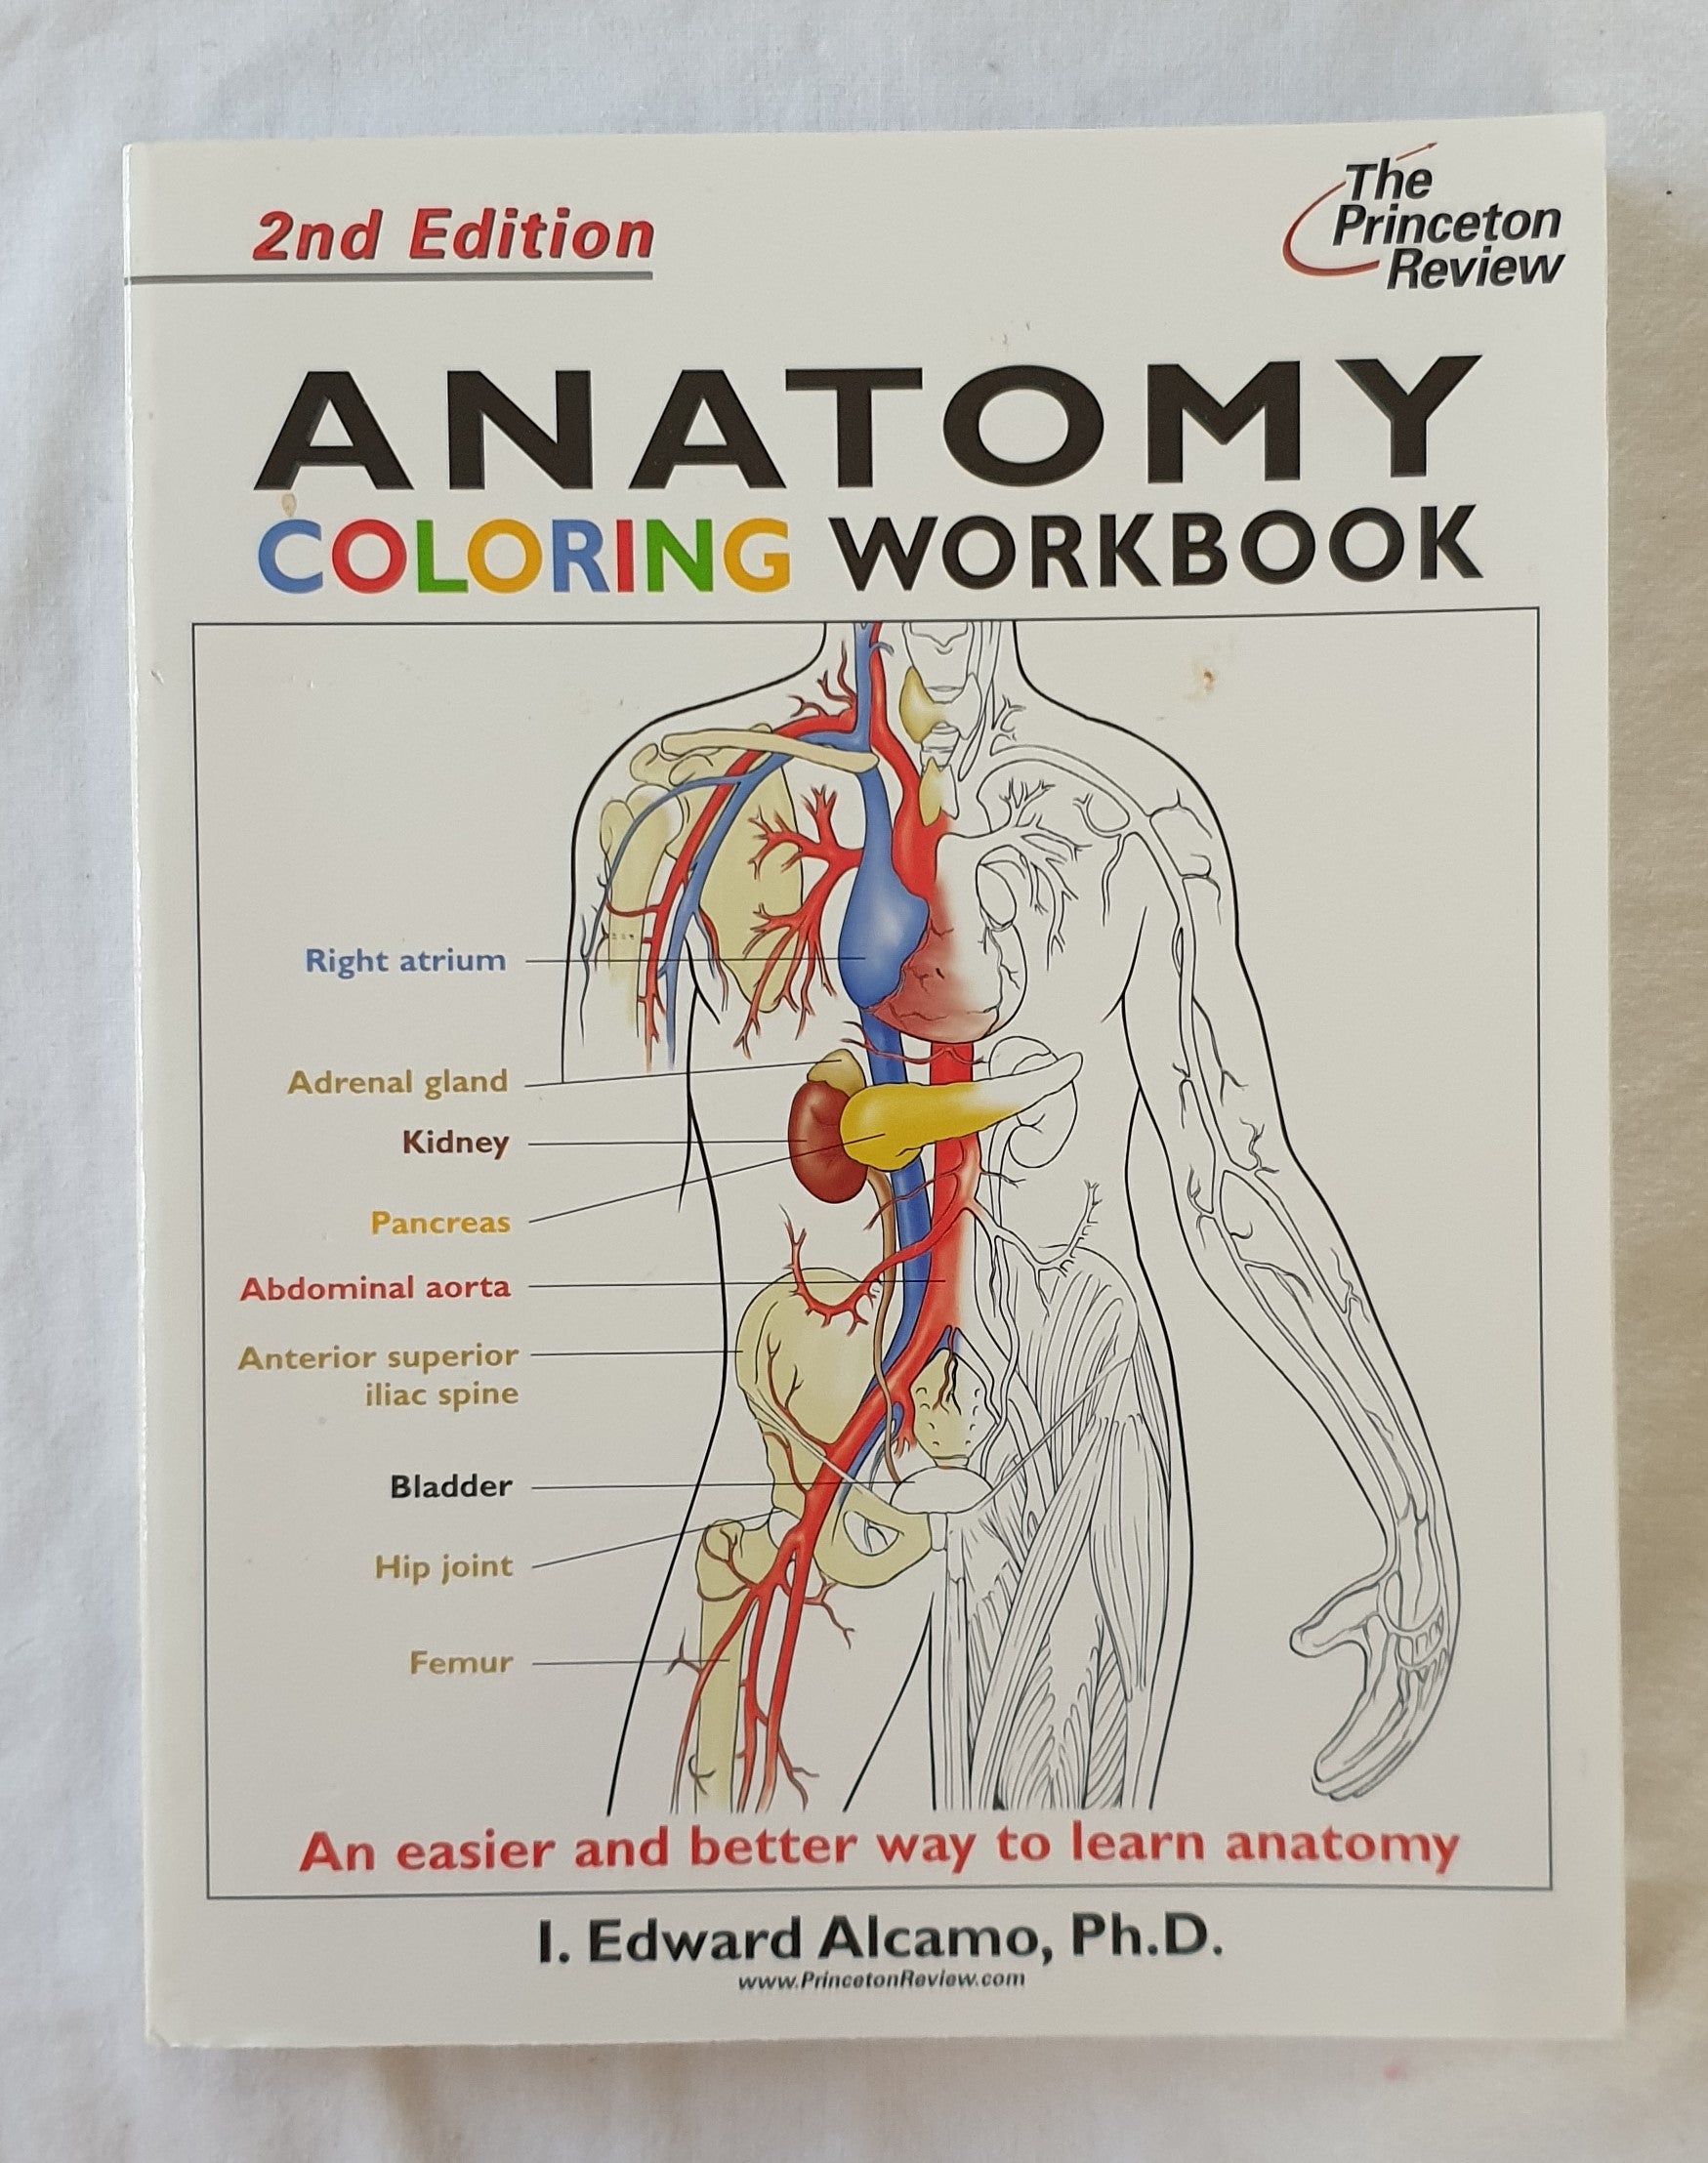 Anatomy Coloring Workbook  An easier way to learn anatomy  by I. Edward Alcamo